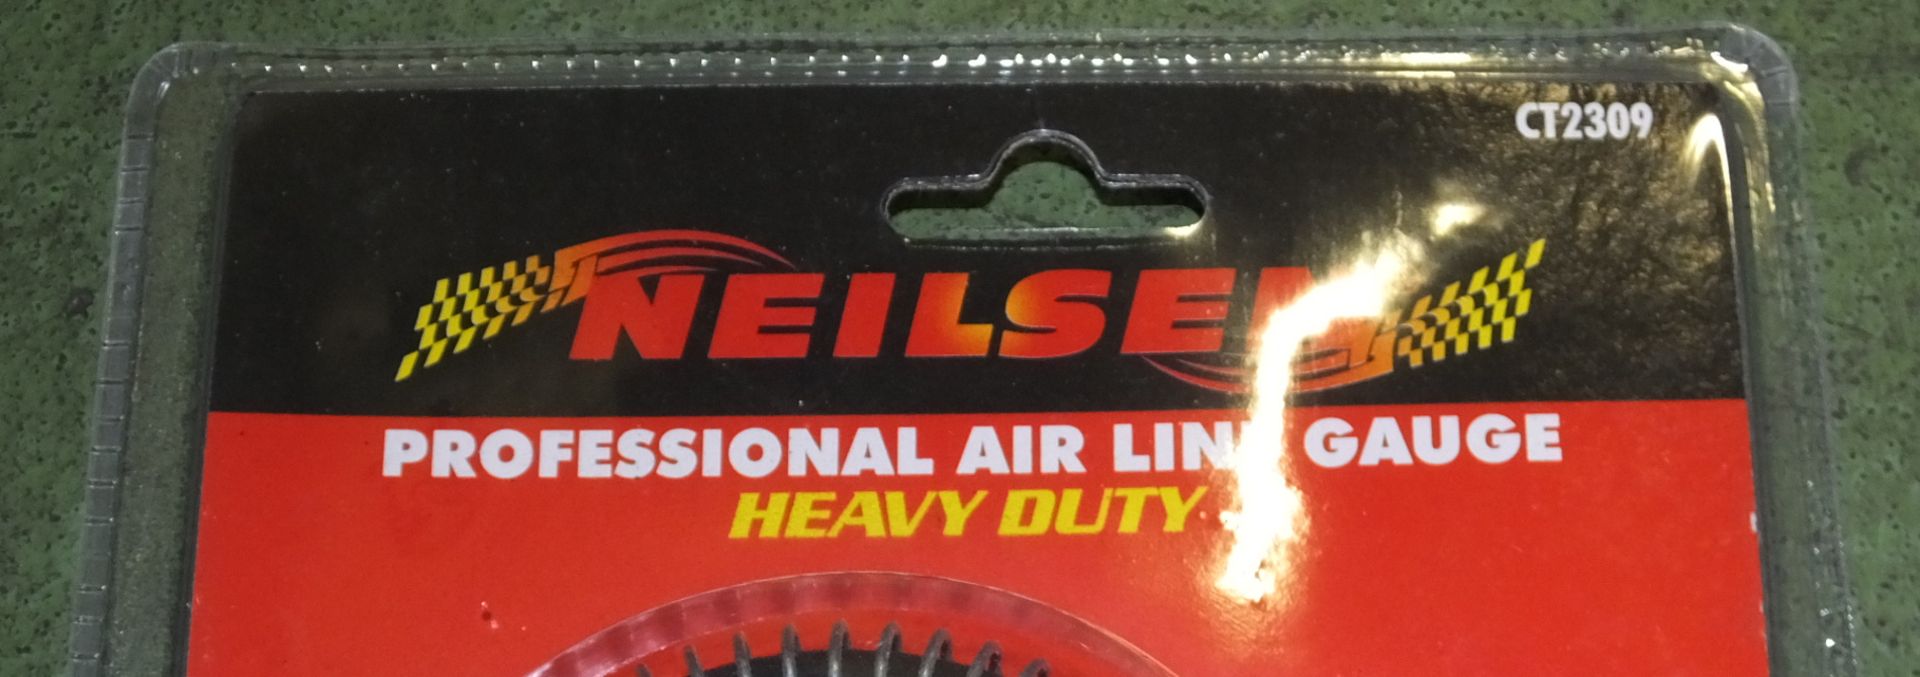 Neilsen heavy duty professional air line gauge - Image 2 of 2